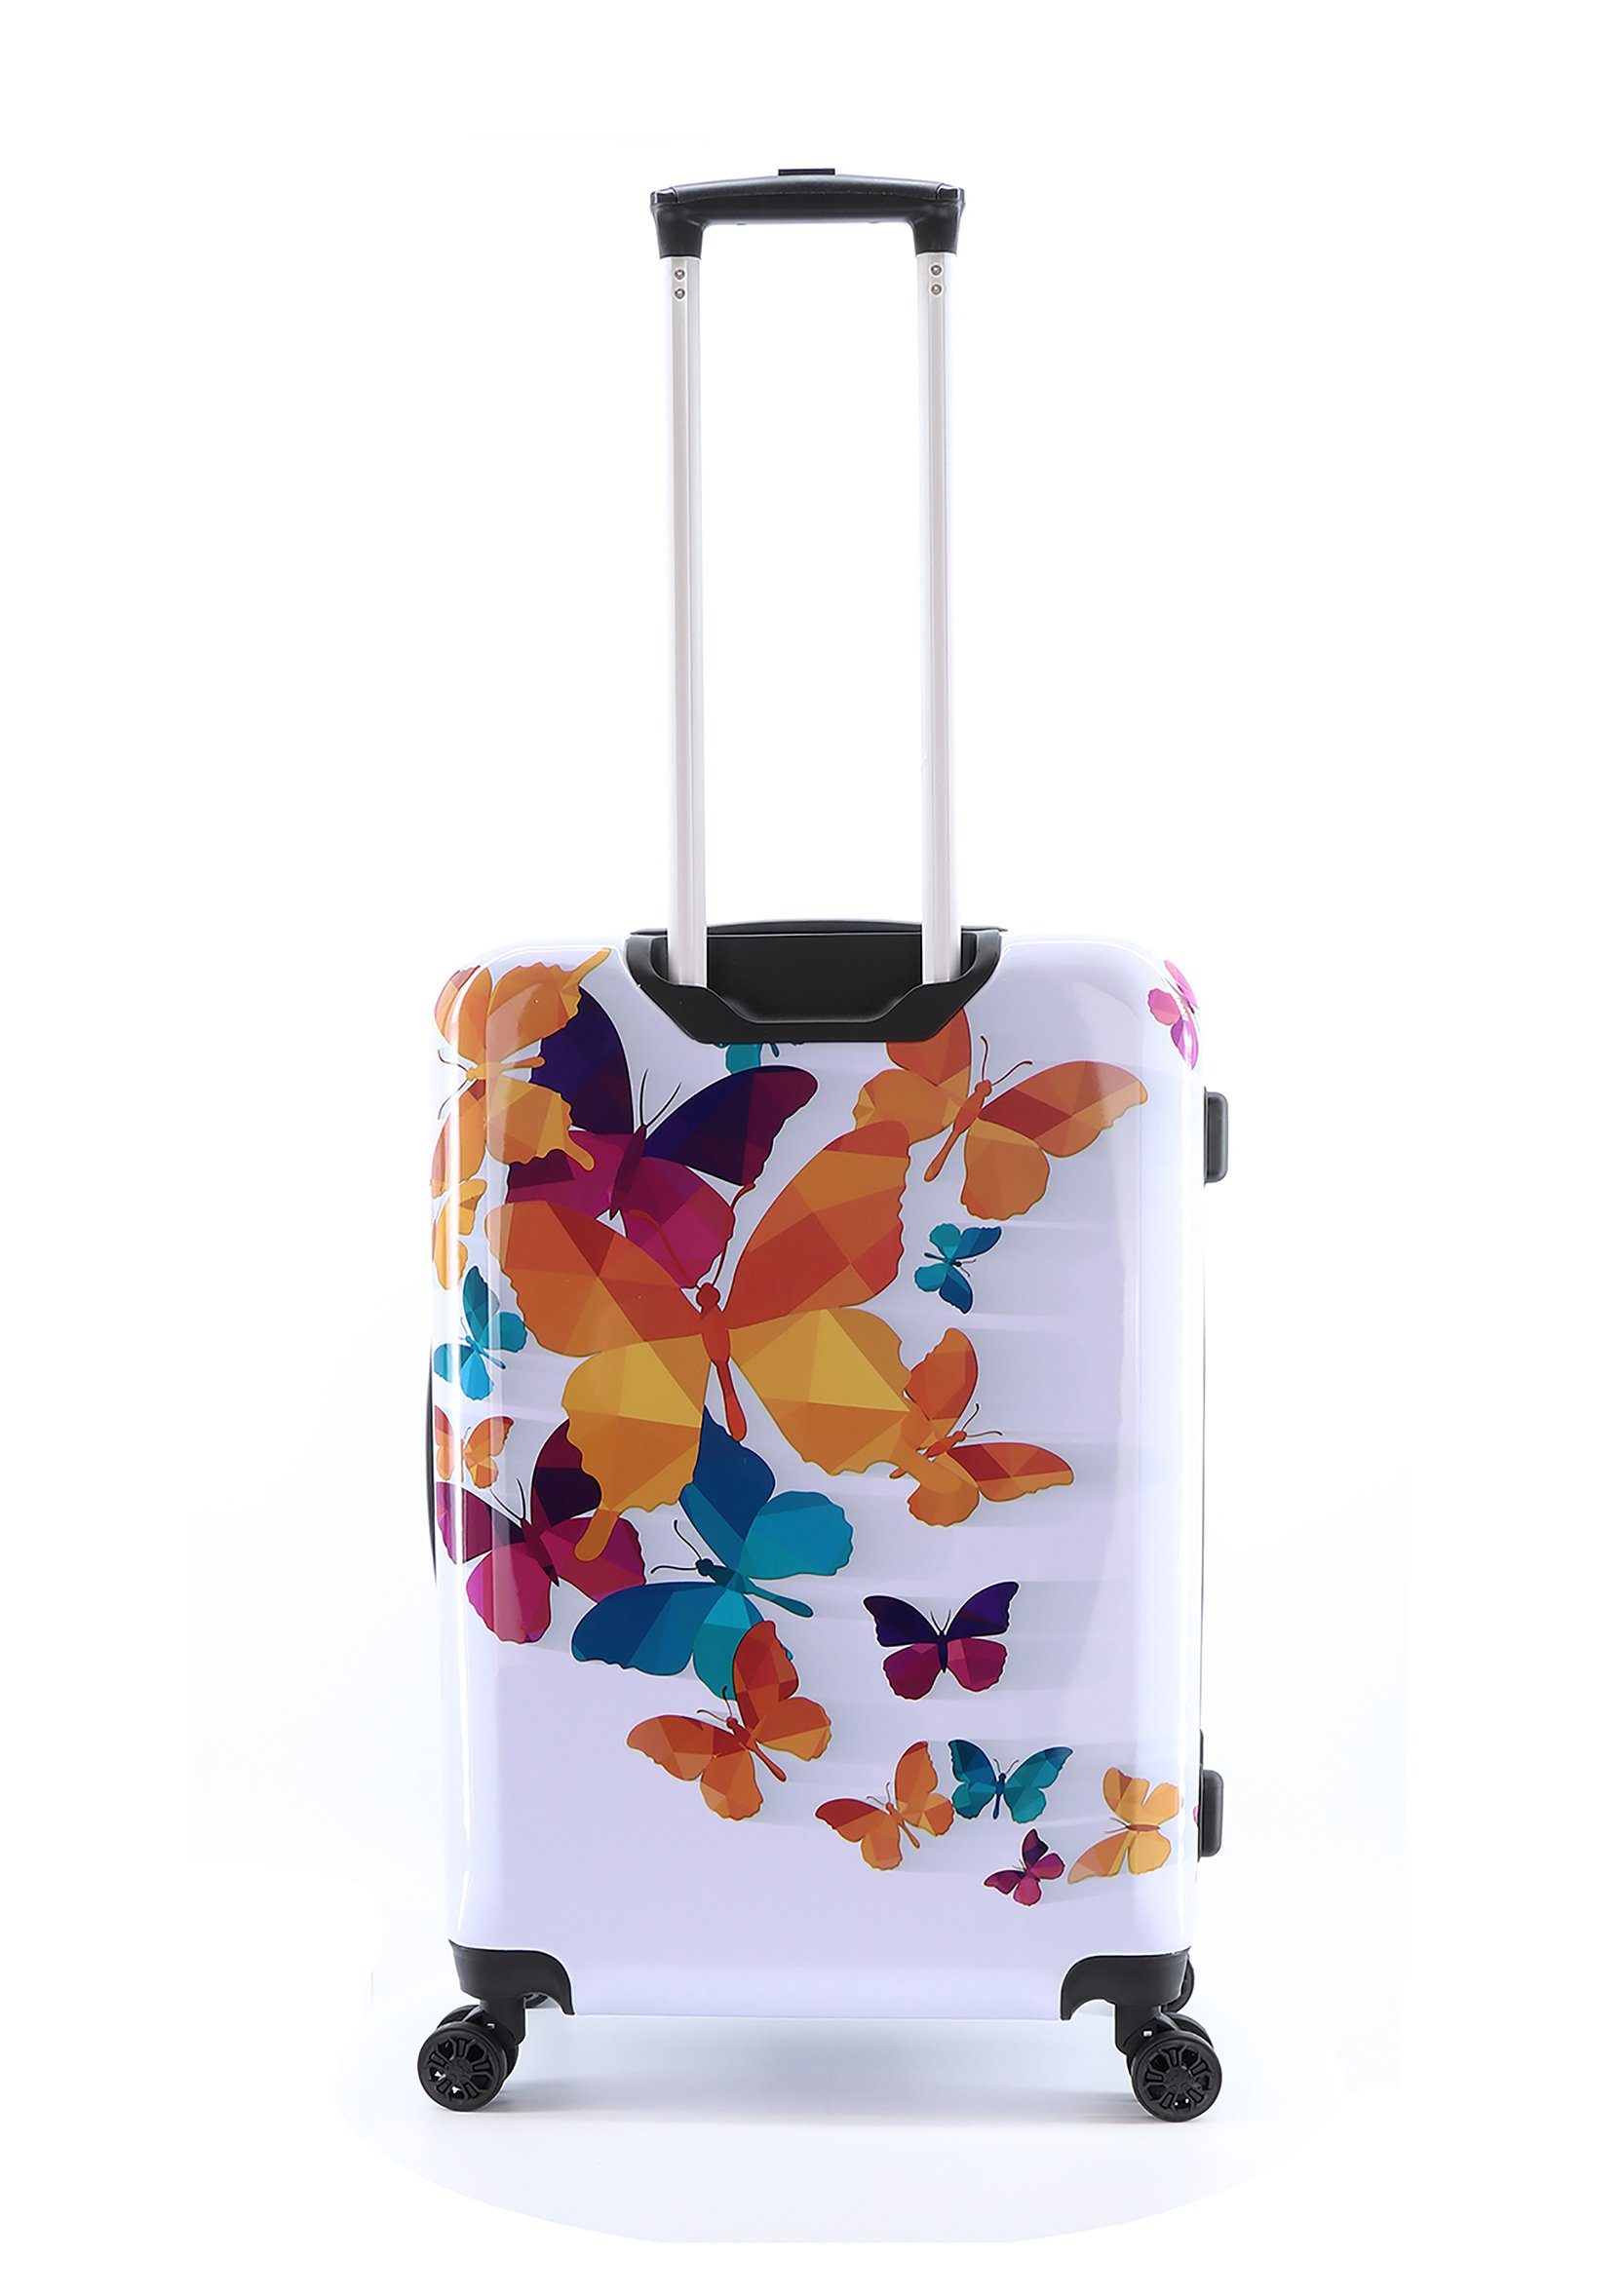 arretierbarem Schmetterling, Aluminium-Trolleysystem Saxoline® mit Koffer